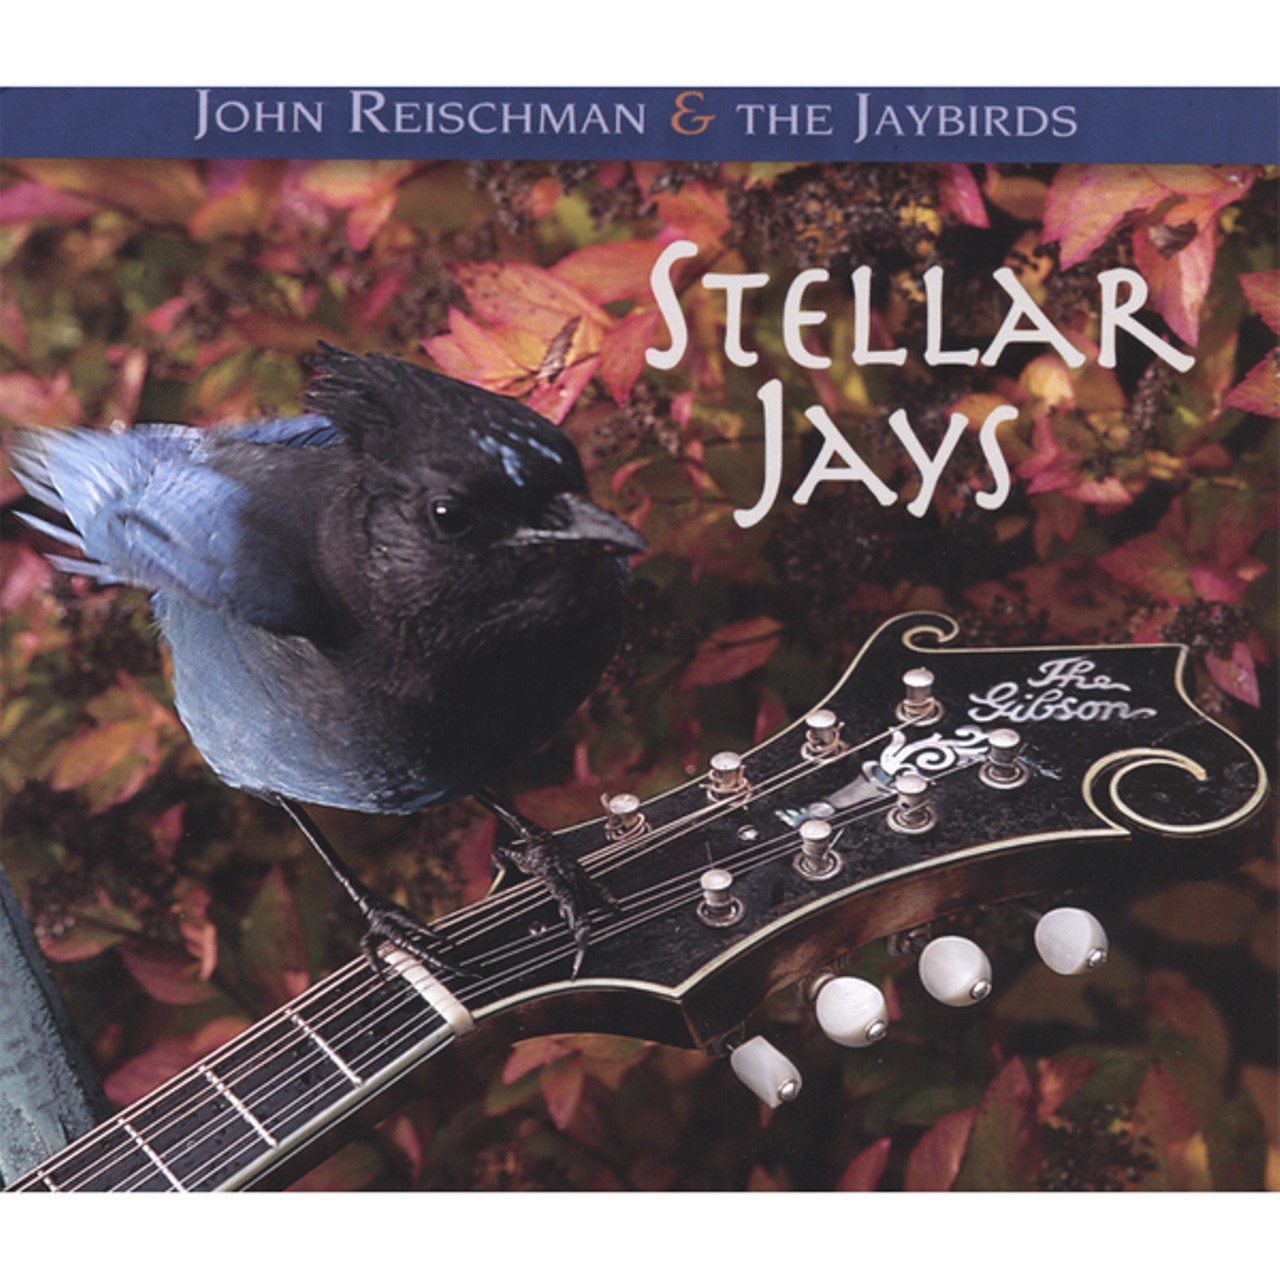 John Reischman & The Jaybirds - Stellar Jays cover album